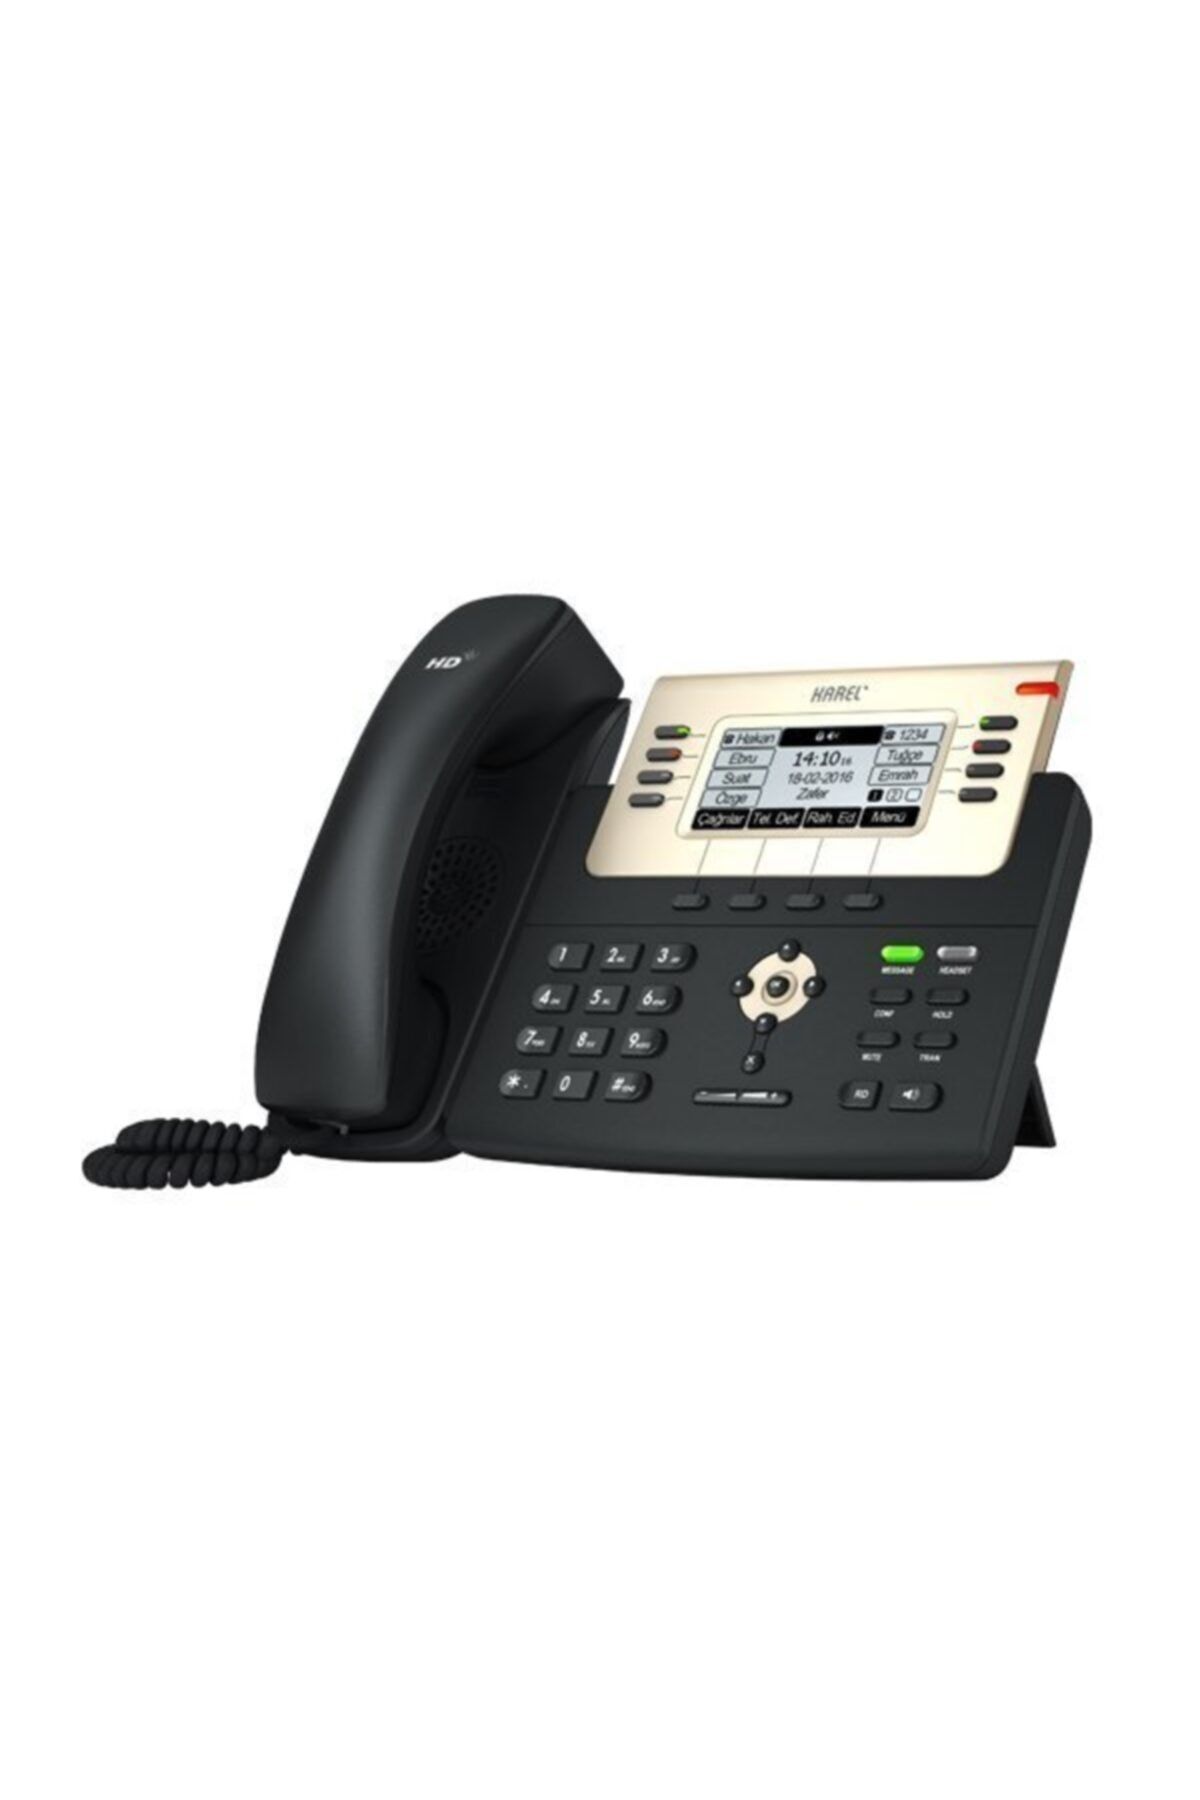 KAREL Ip 1141 Ip Telefon (poe-gigabit)